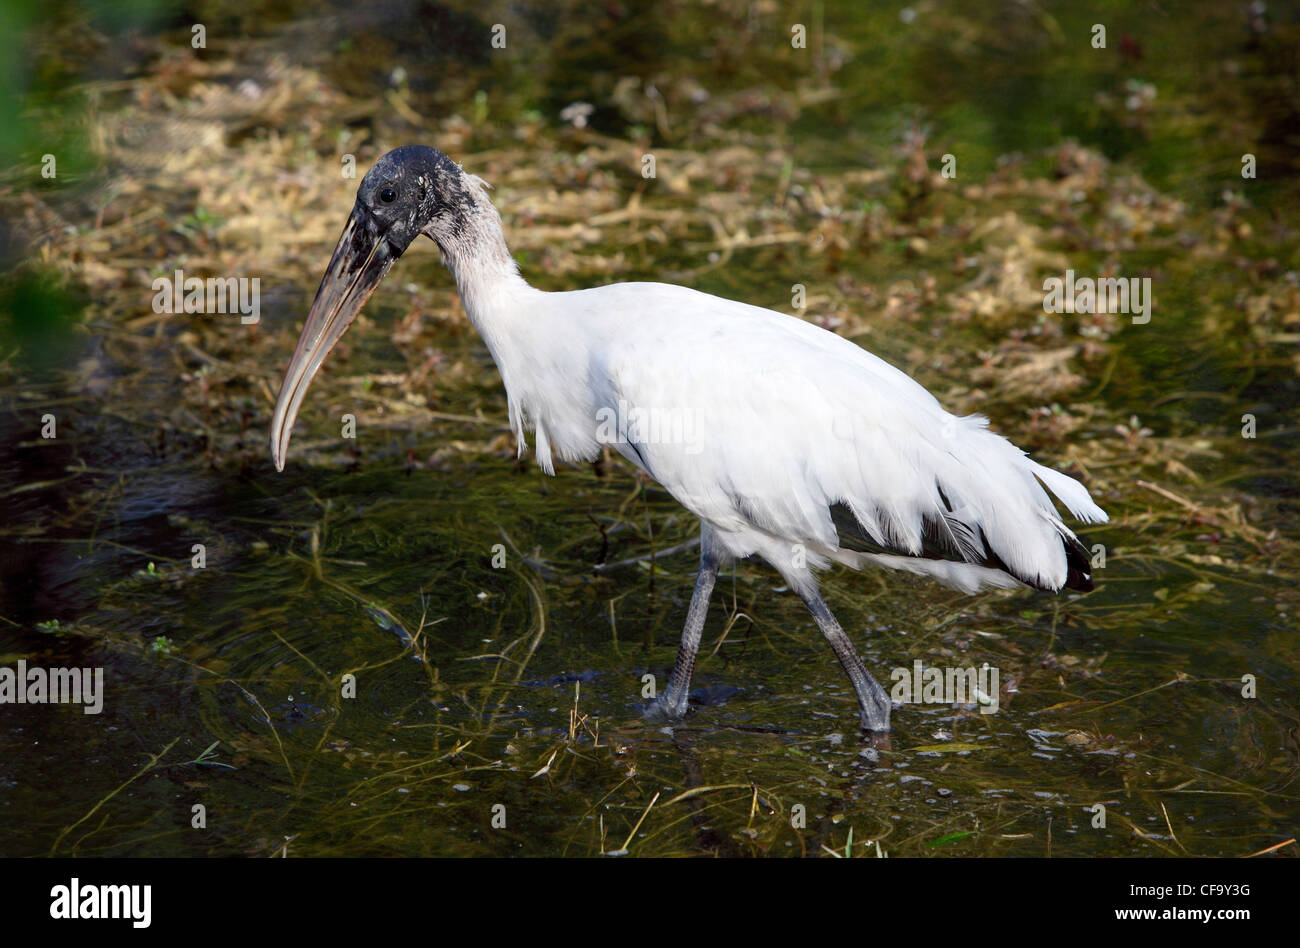 Wood stork, Florida Everglades Stock Photo